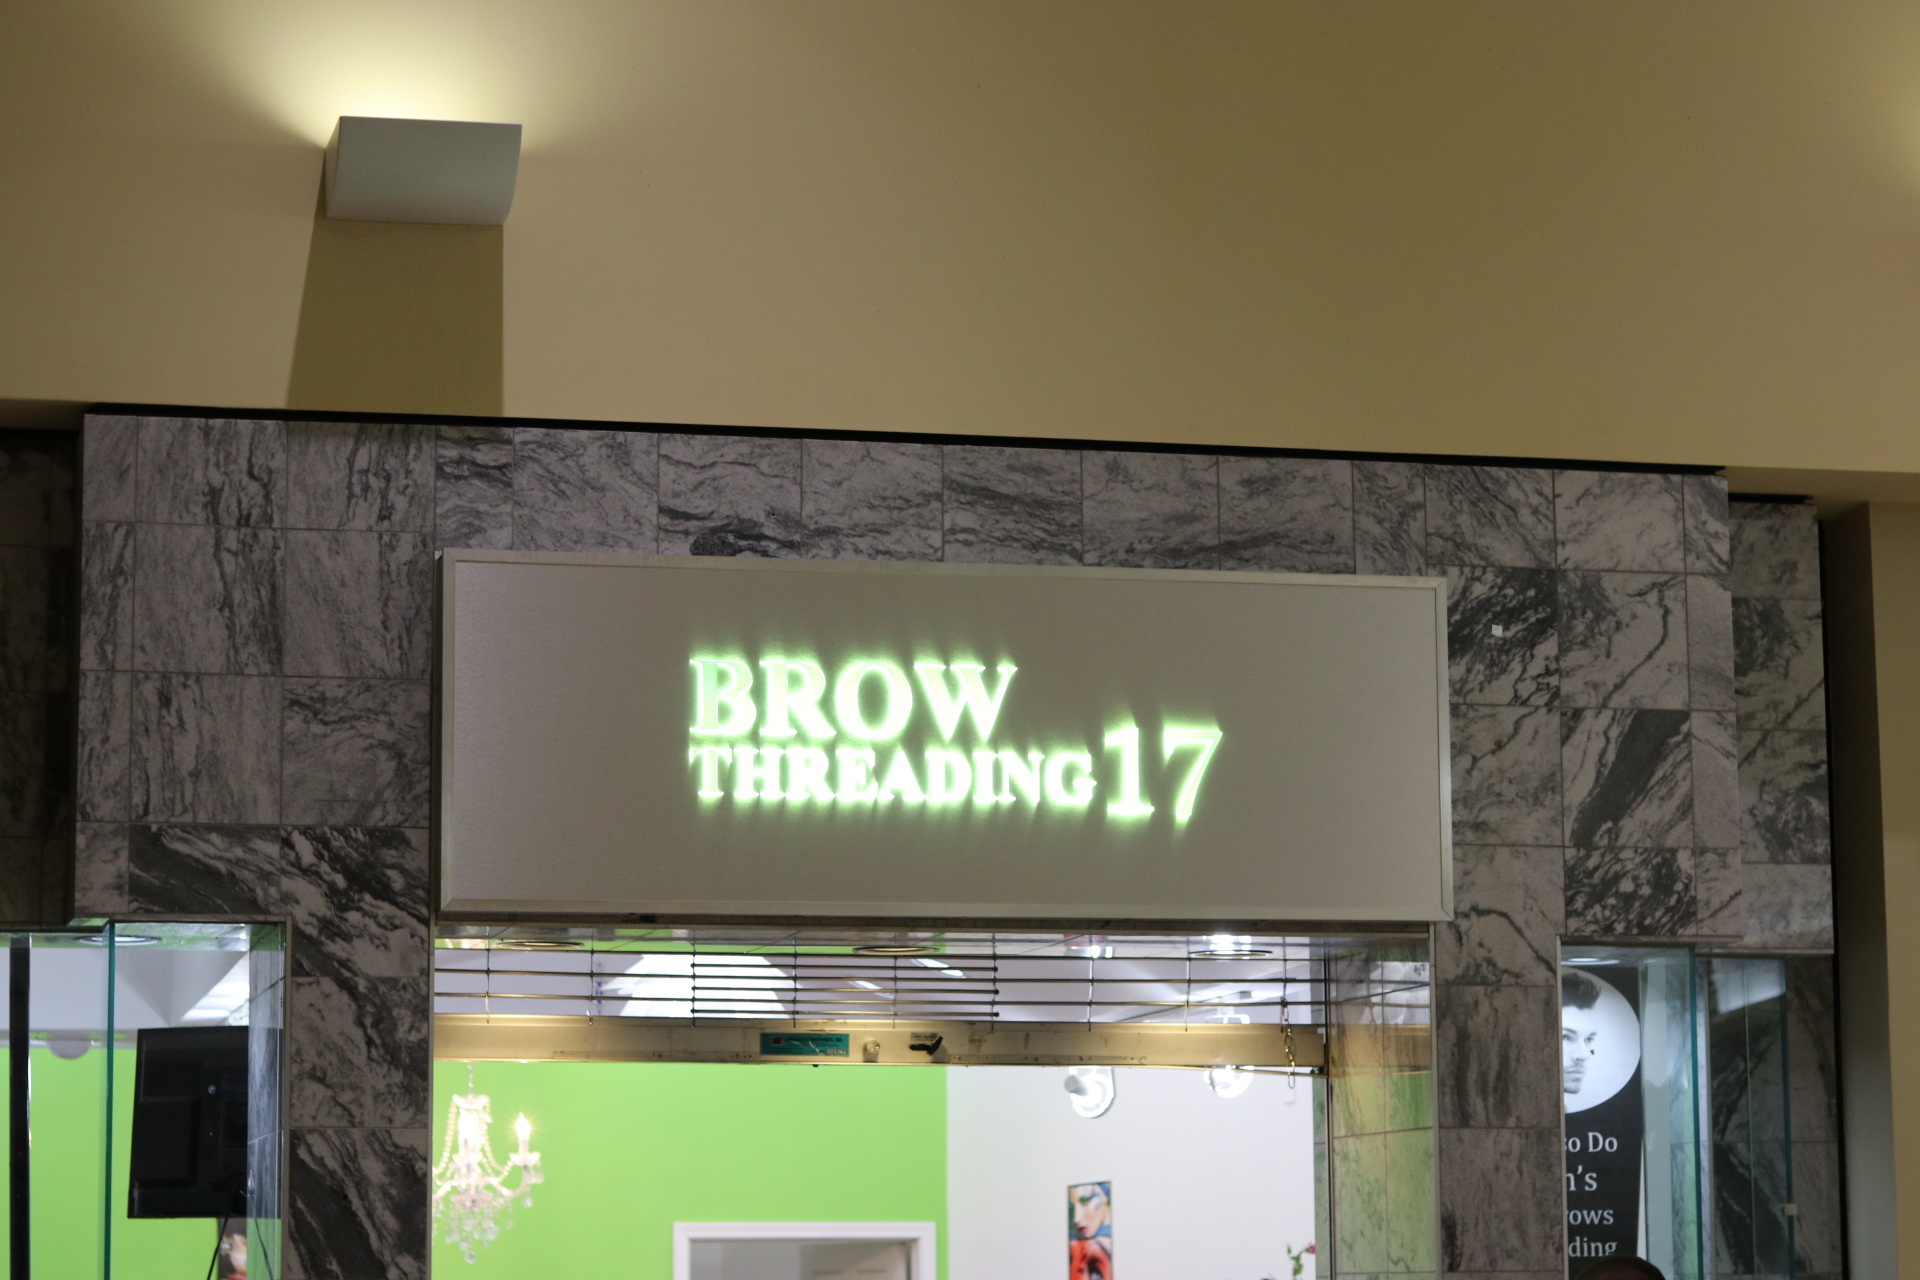 Brow Threading 17